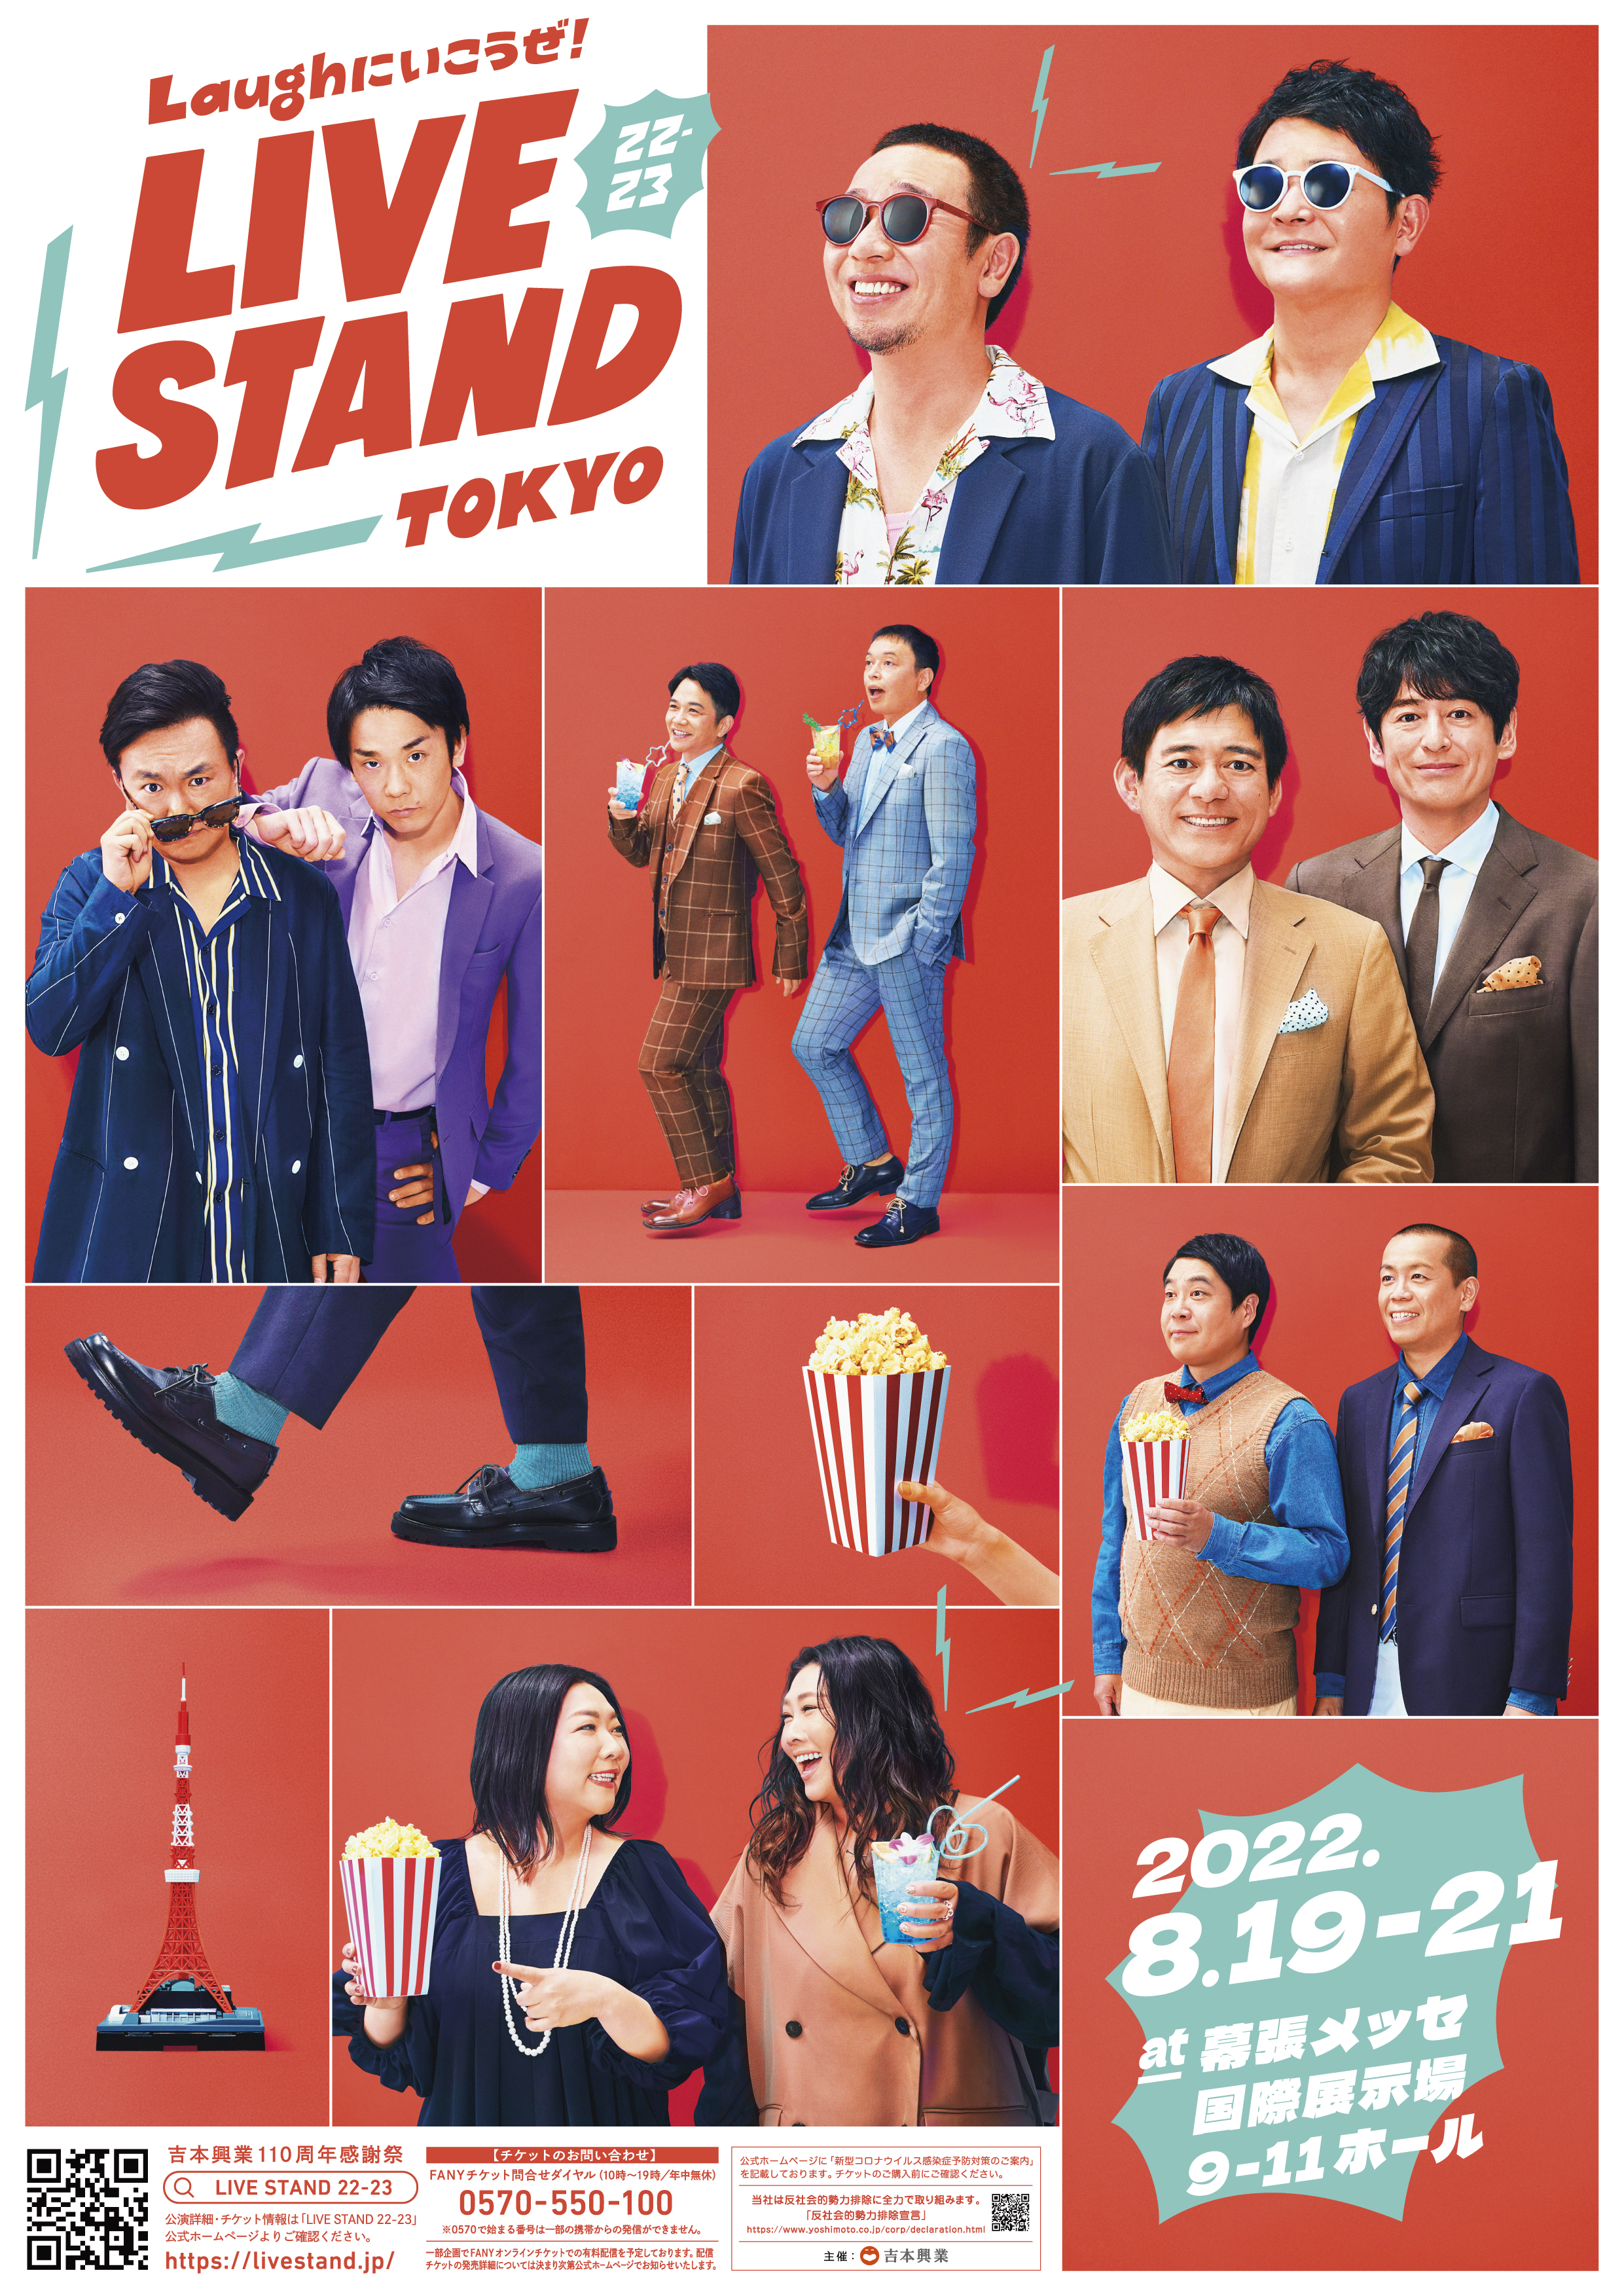 LIVE STAND22-23』大阪公演の第一弾ラインナップ、出演芸人64 組発表